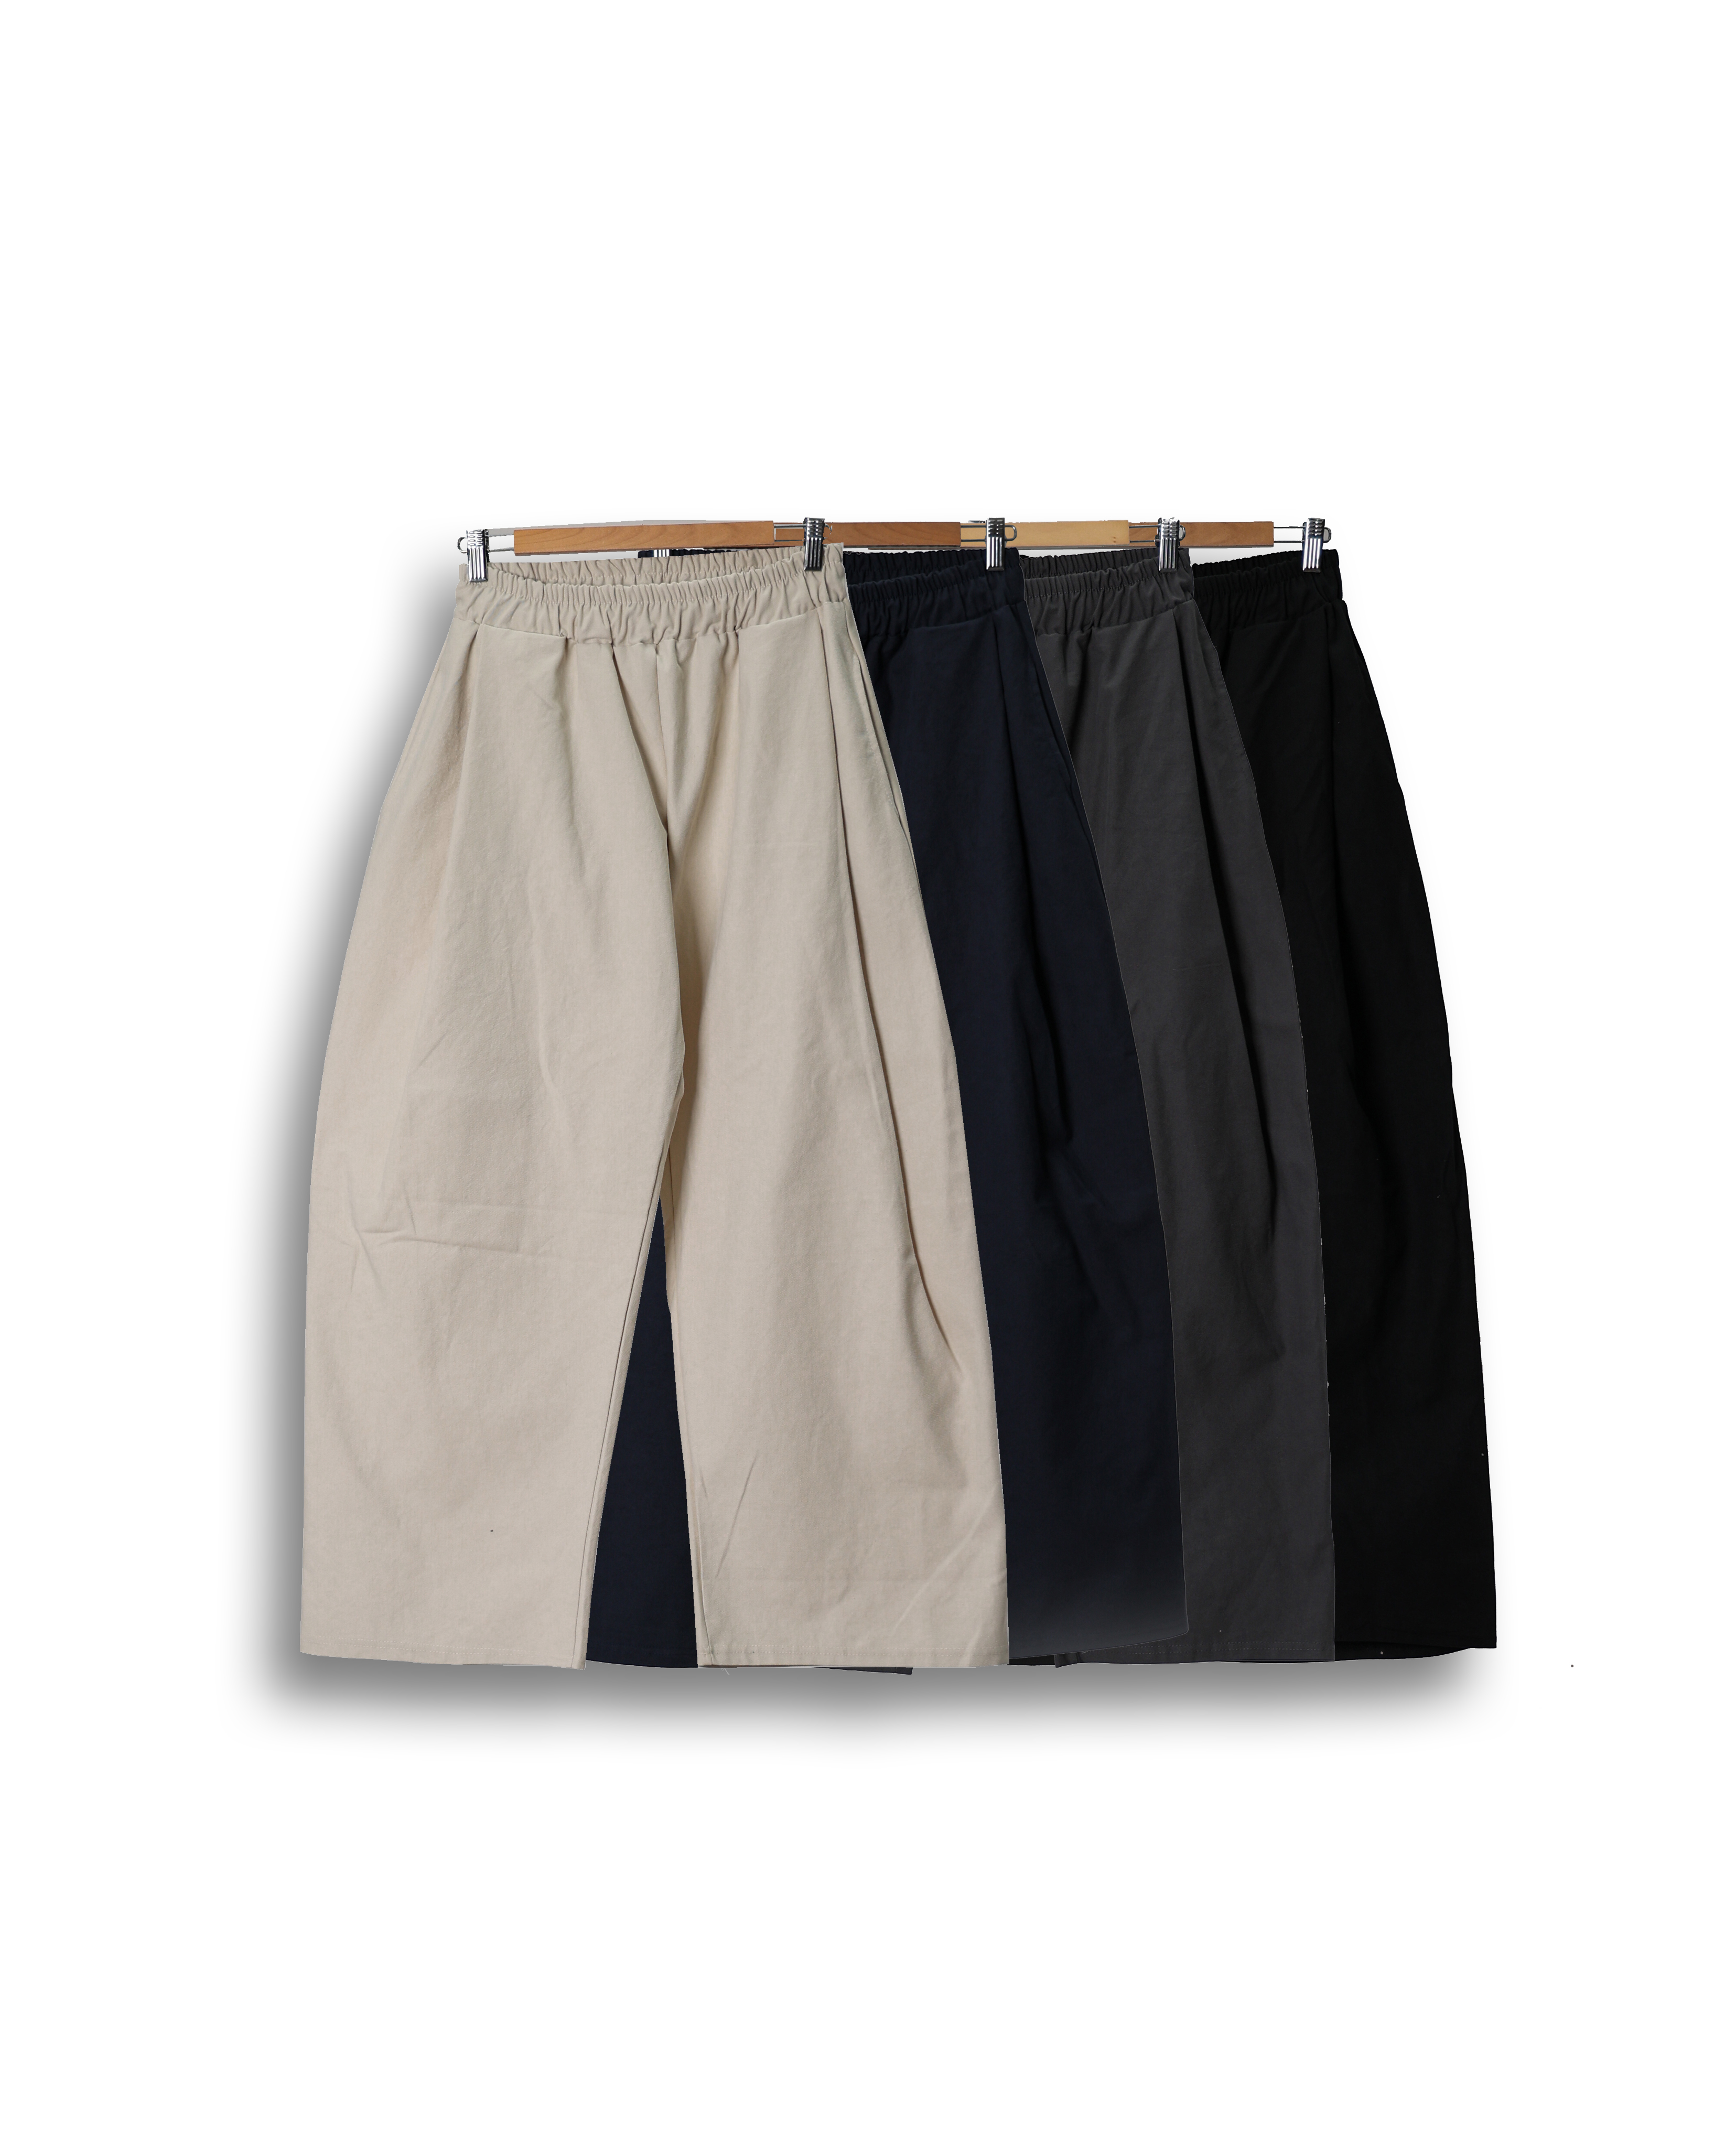 MILLI City Deep Wide Chino Pants (Black/Charcoal/Navy/Ivory)